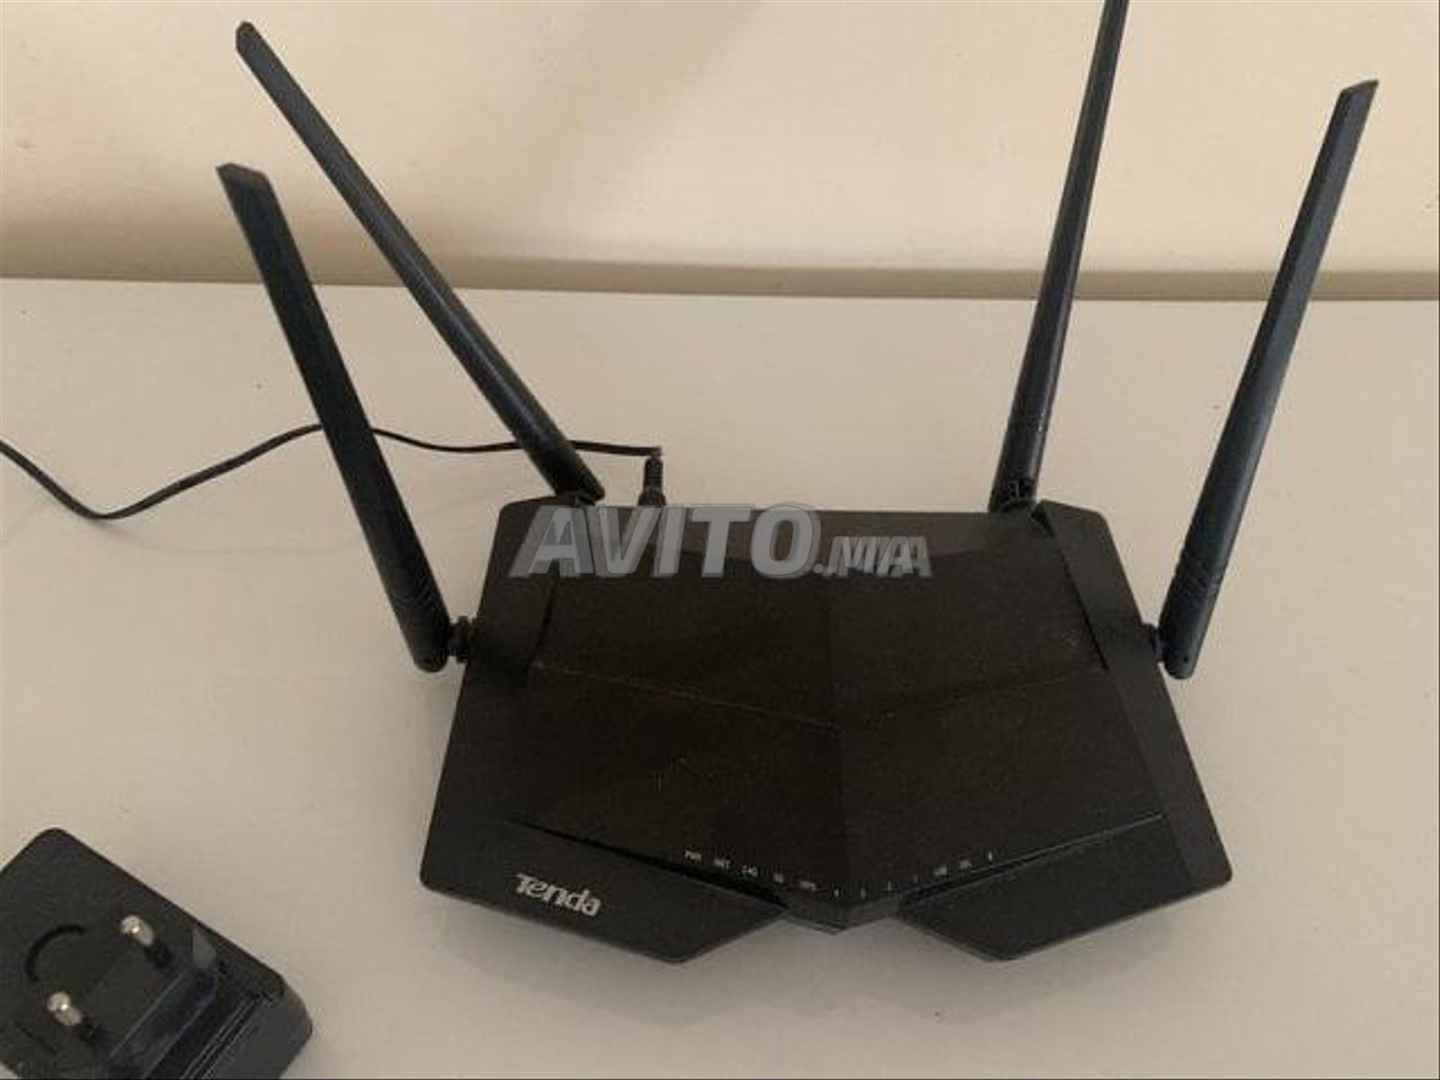 Antenne WiFi TNP 10 dBi - Réseau d'antenne 2,4 GHz Maroc